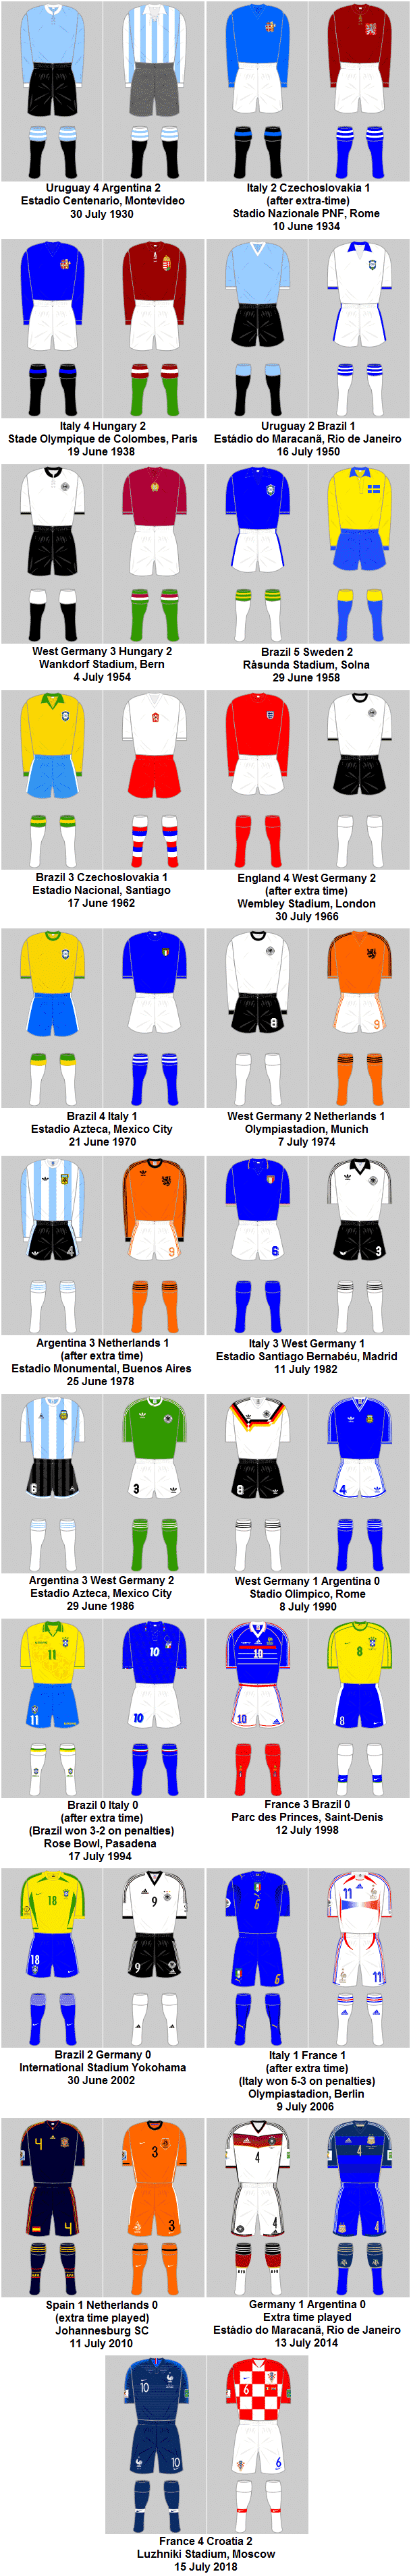 FIFA World Cup Final Matches Kits